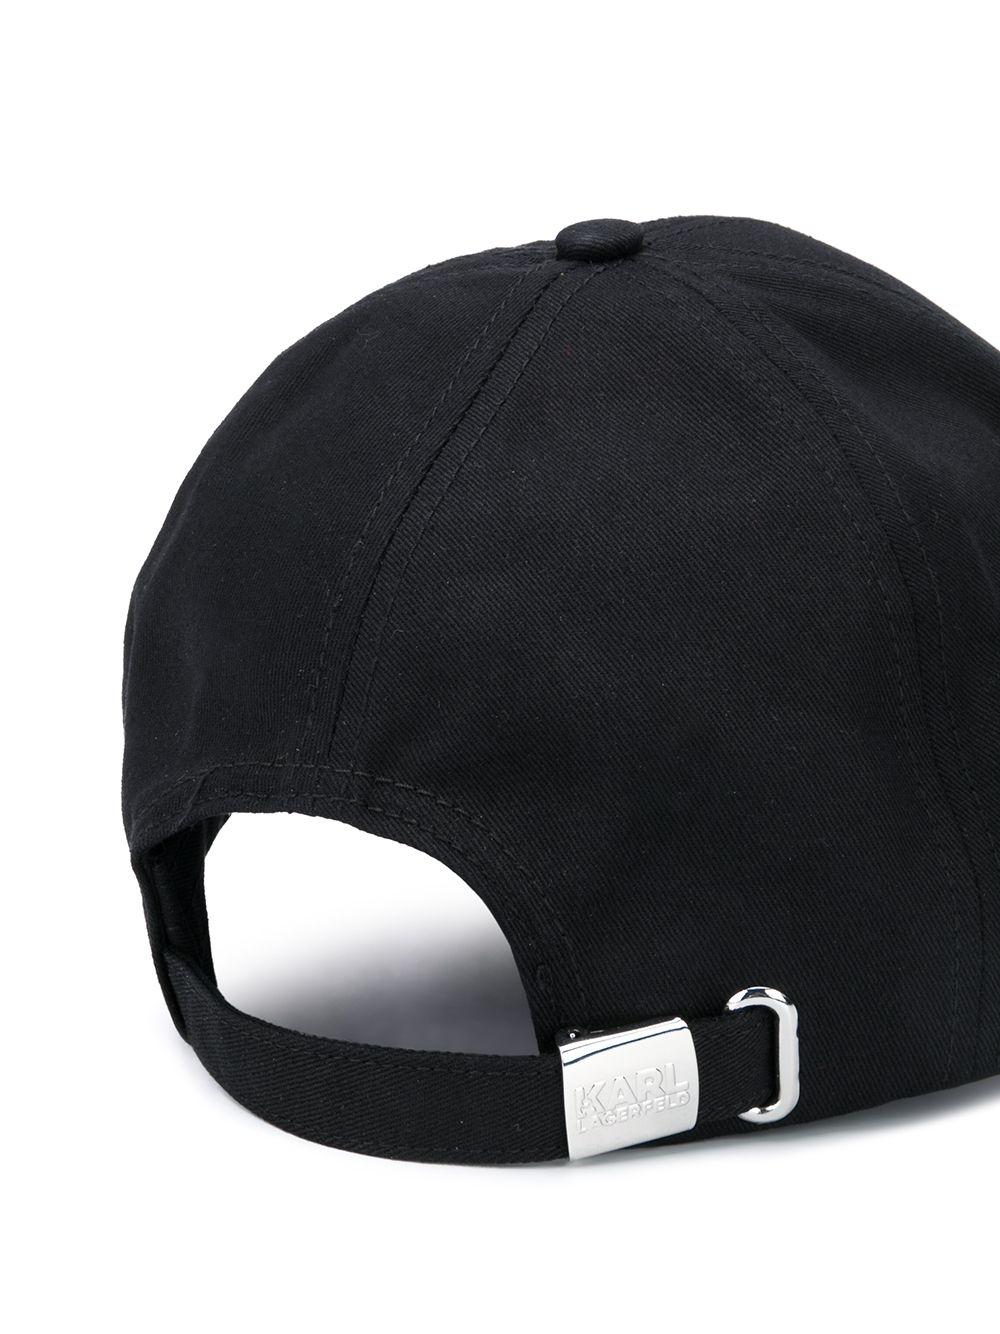 Gorra Karl Lagerfeld negra k/essential cap